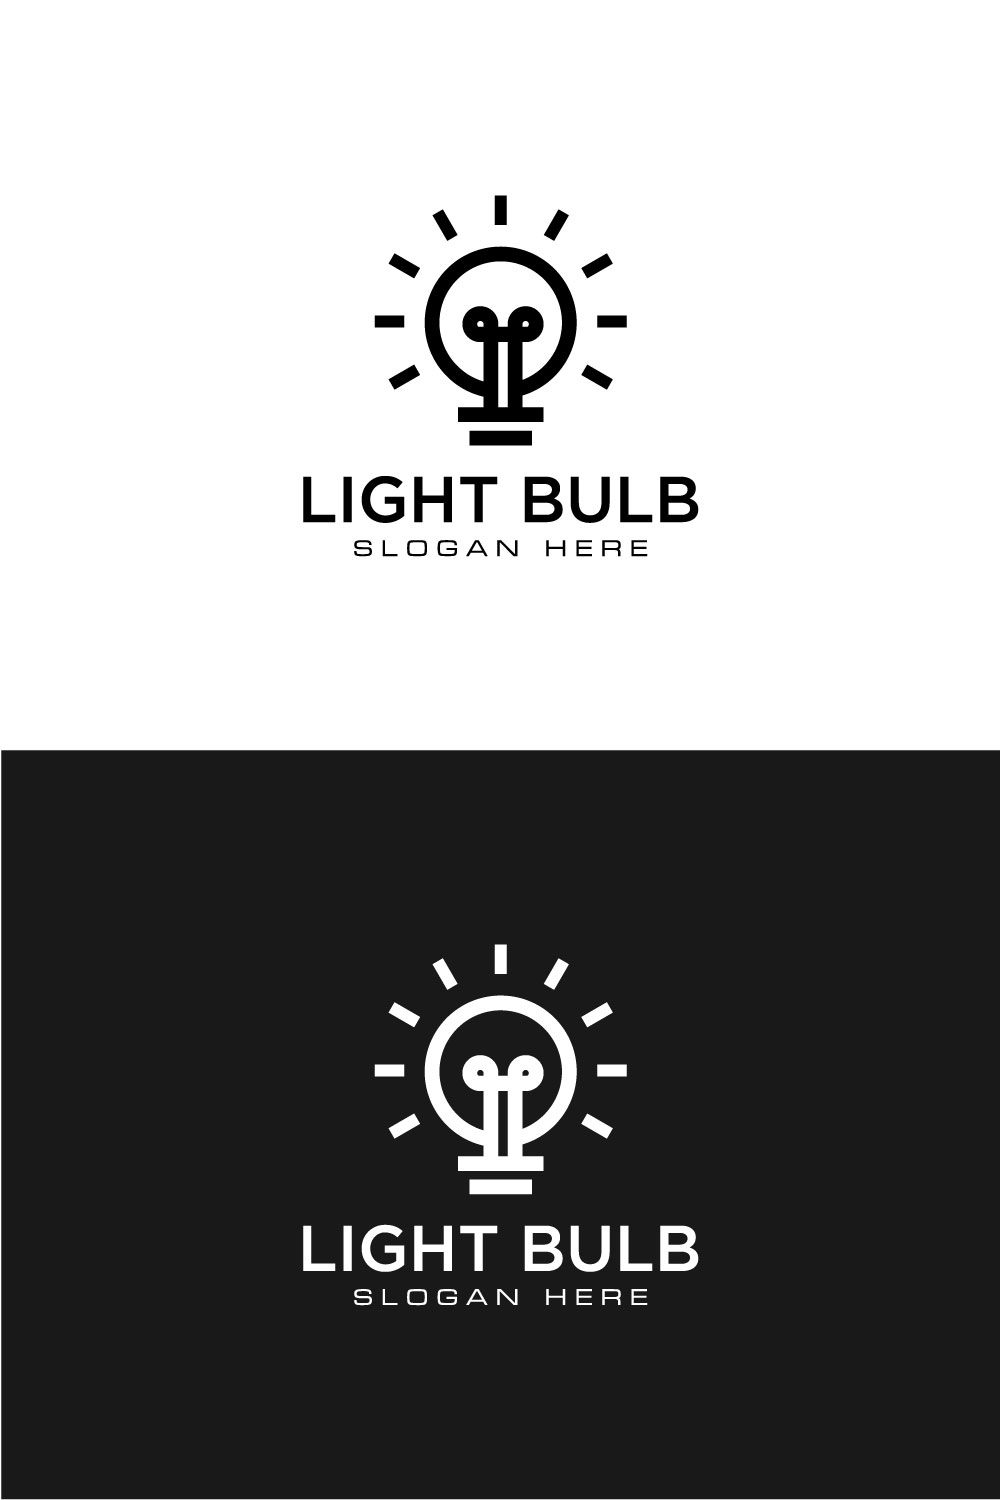 Light Bulb Beautiful Logo Design Vector Pinterest Image.